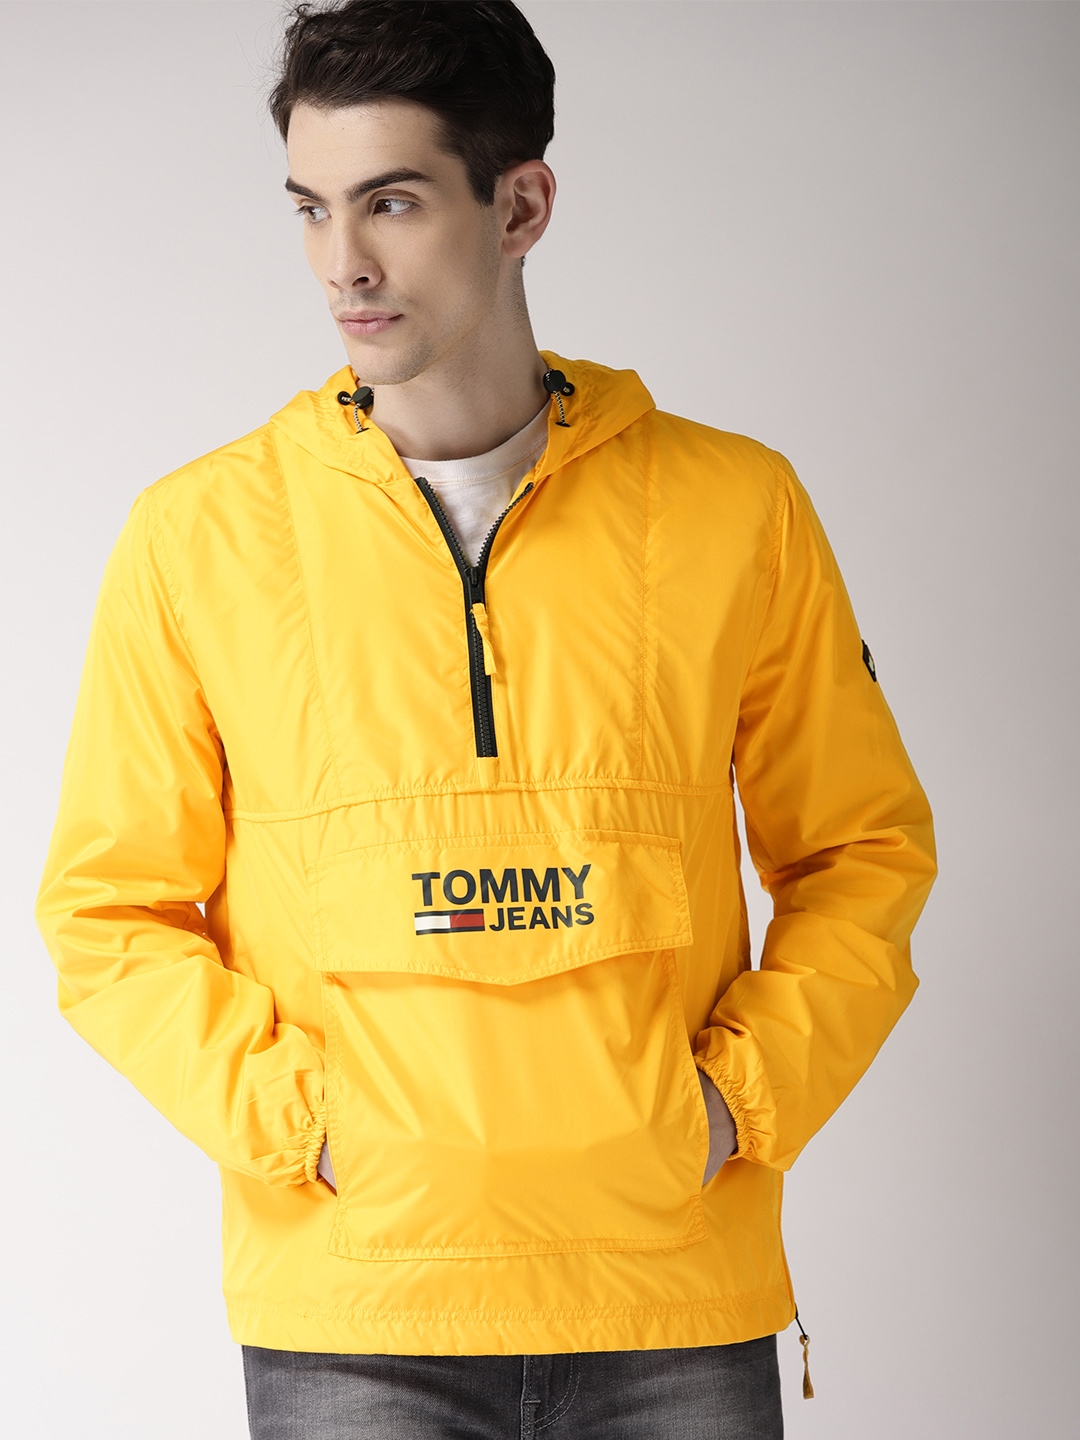 tommy hilfiger men's lightweight jacket